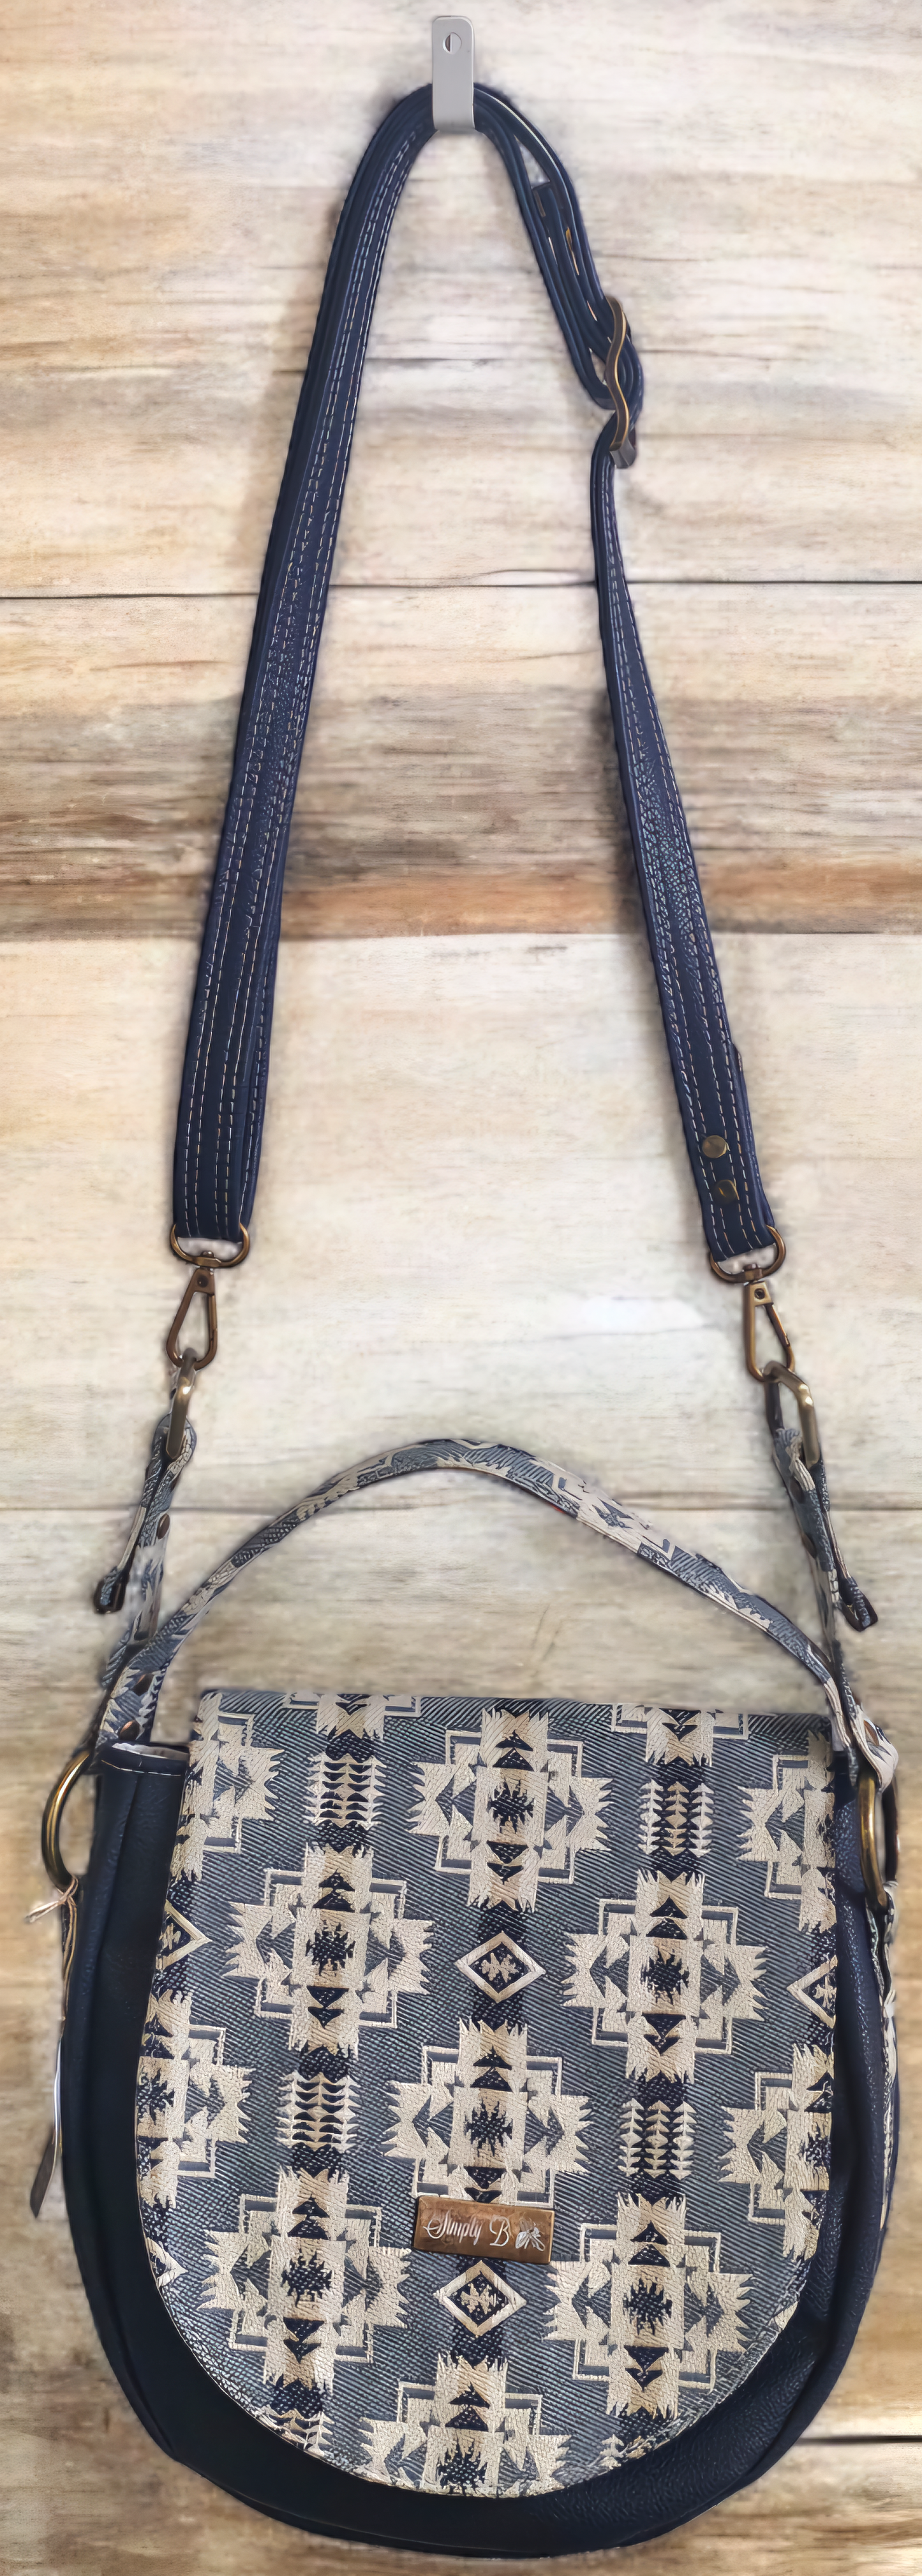 Simply B: Meridias Shoulder Bag- Pendelton Blue with Faux leather